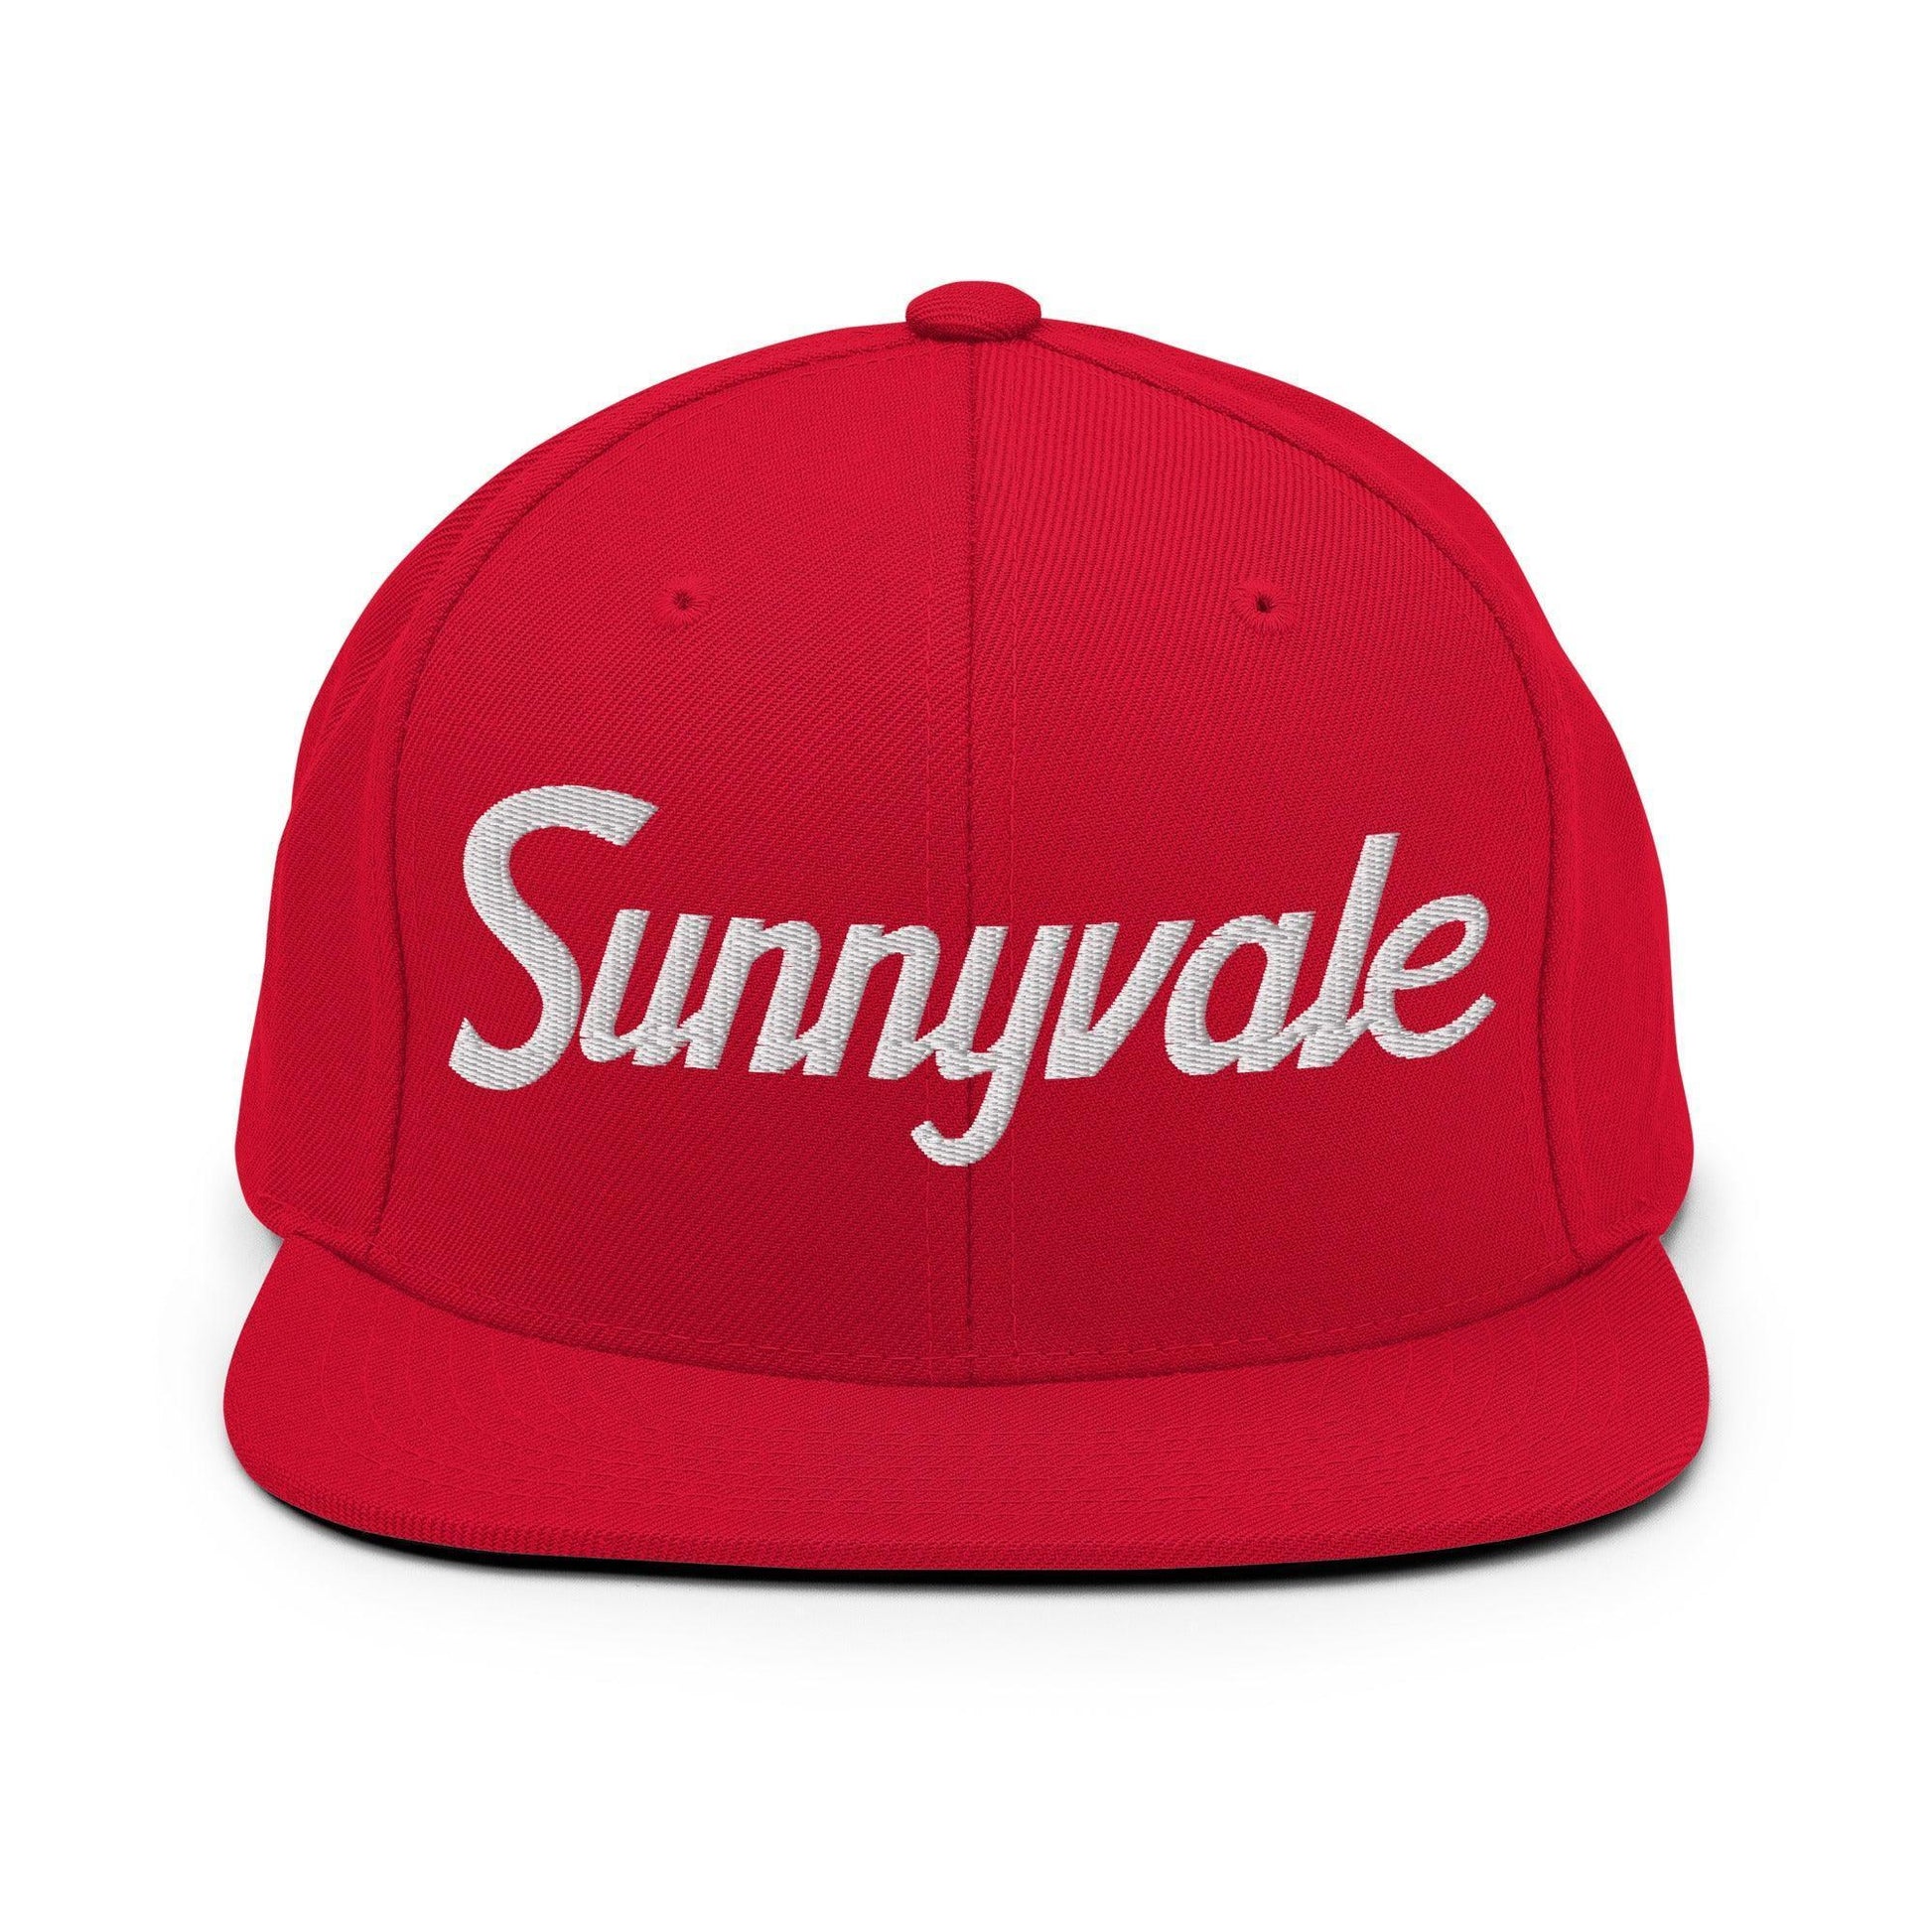 Sunnyvale Script Snapback Hat Red